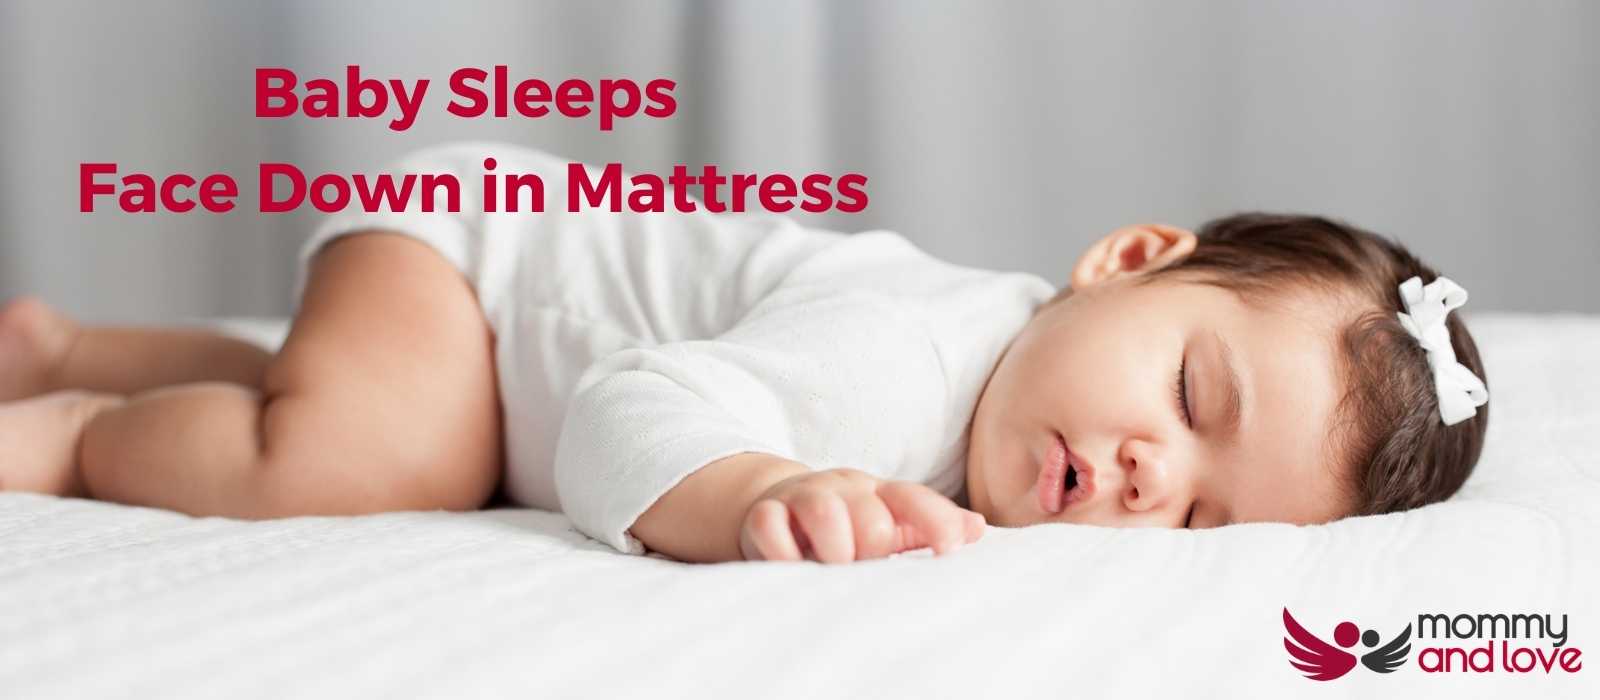 Baby Sleeps Face Down in Mattress